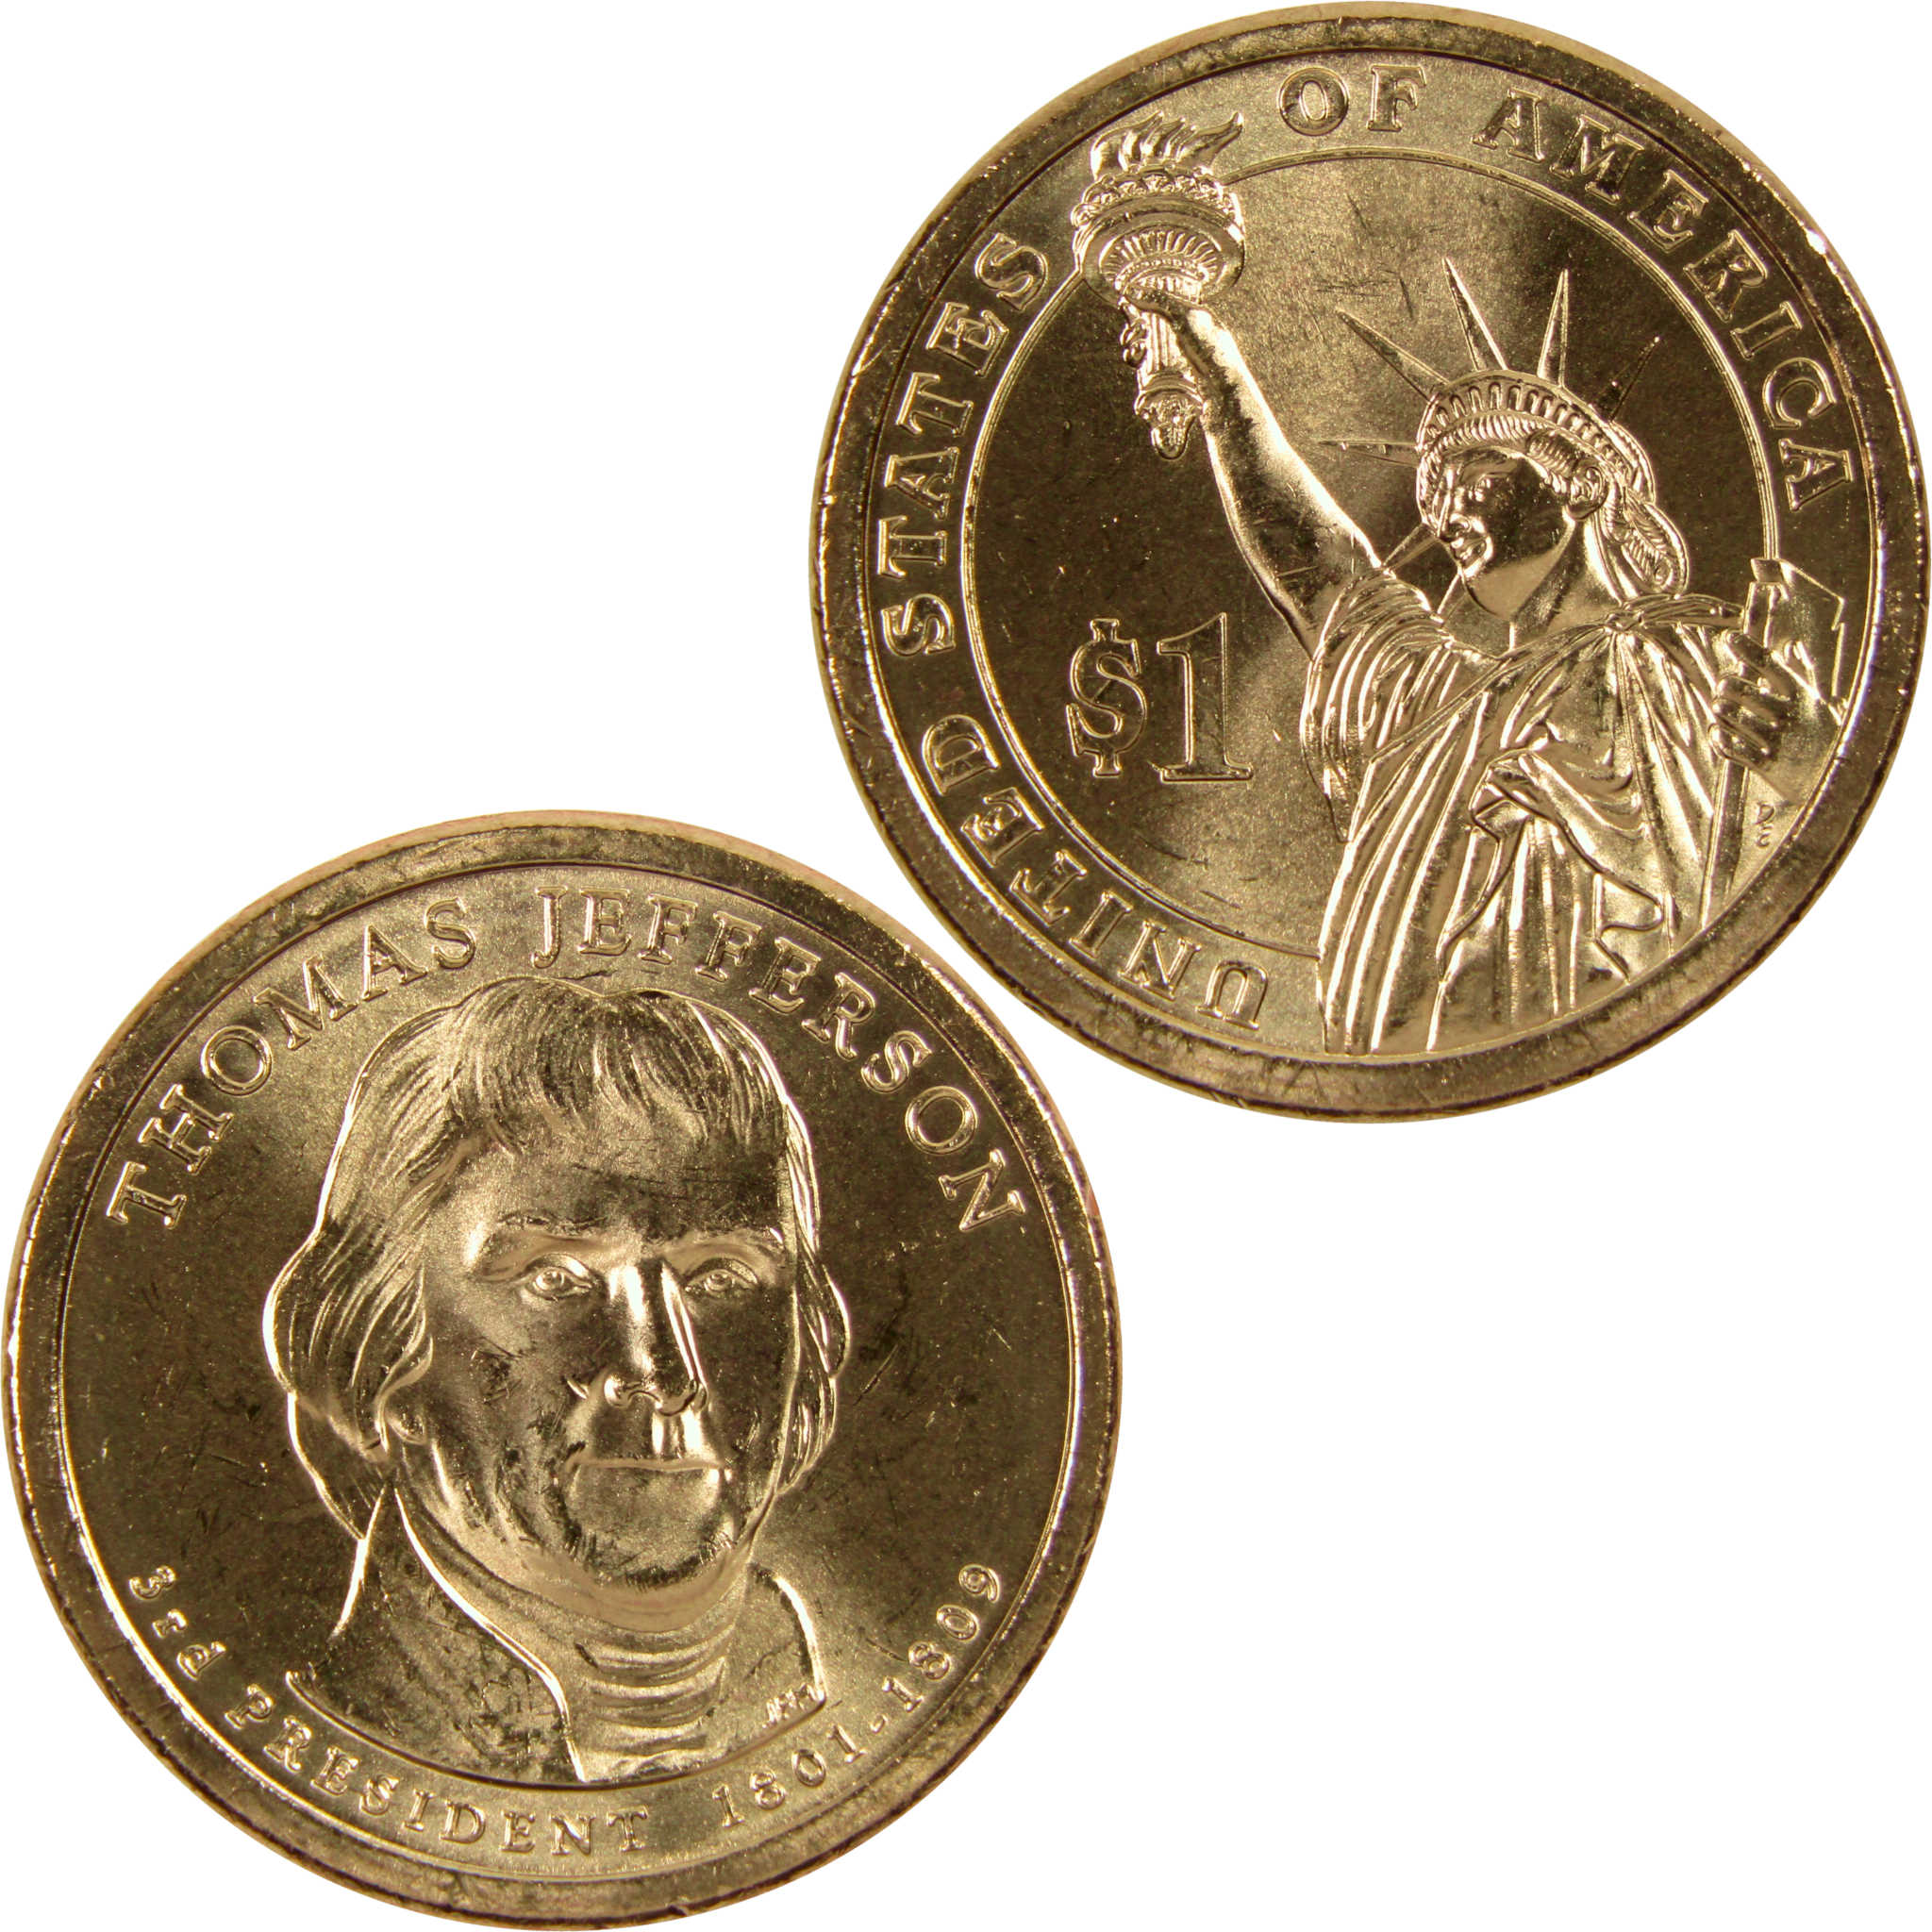 2007 P Thomas Jefferson Presidential Dollar BU Uncirculated $1 Coin